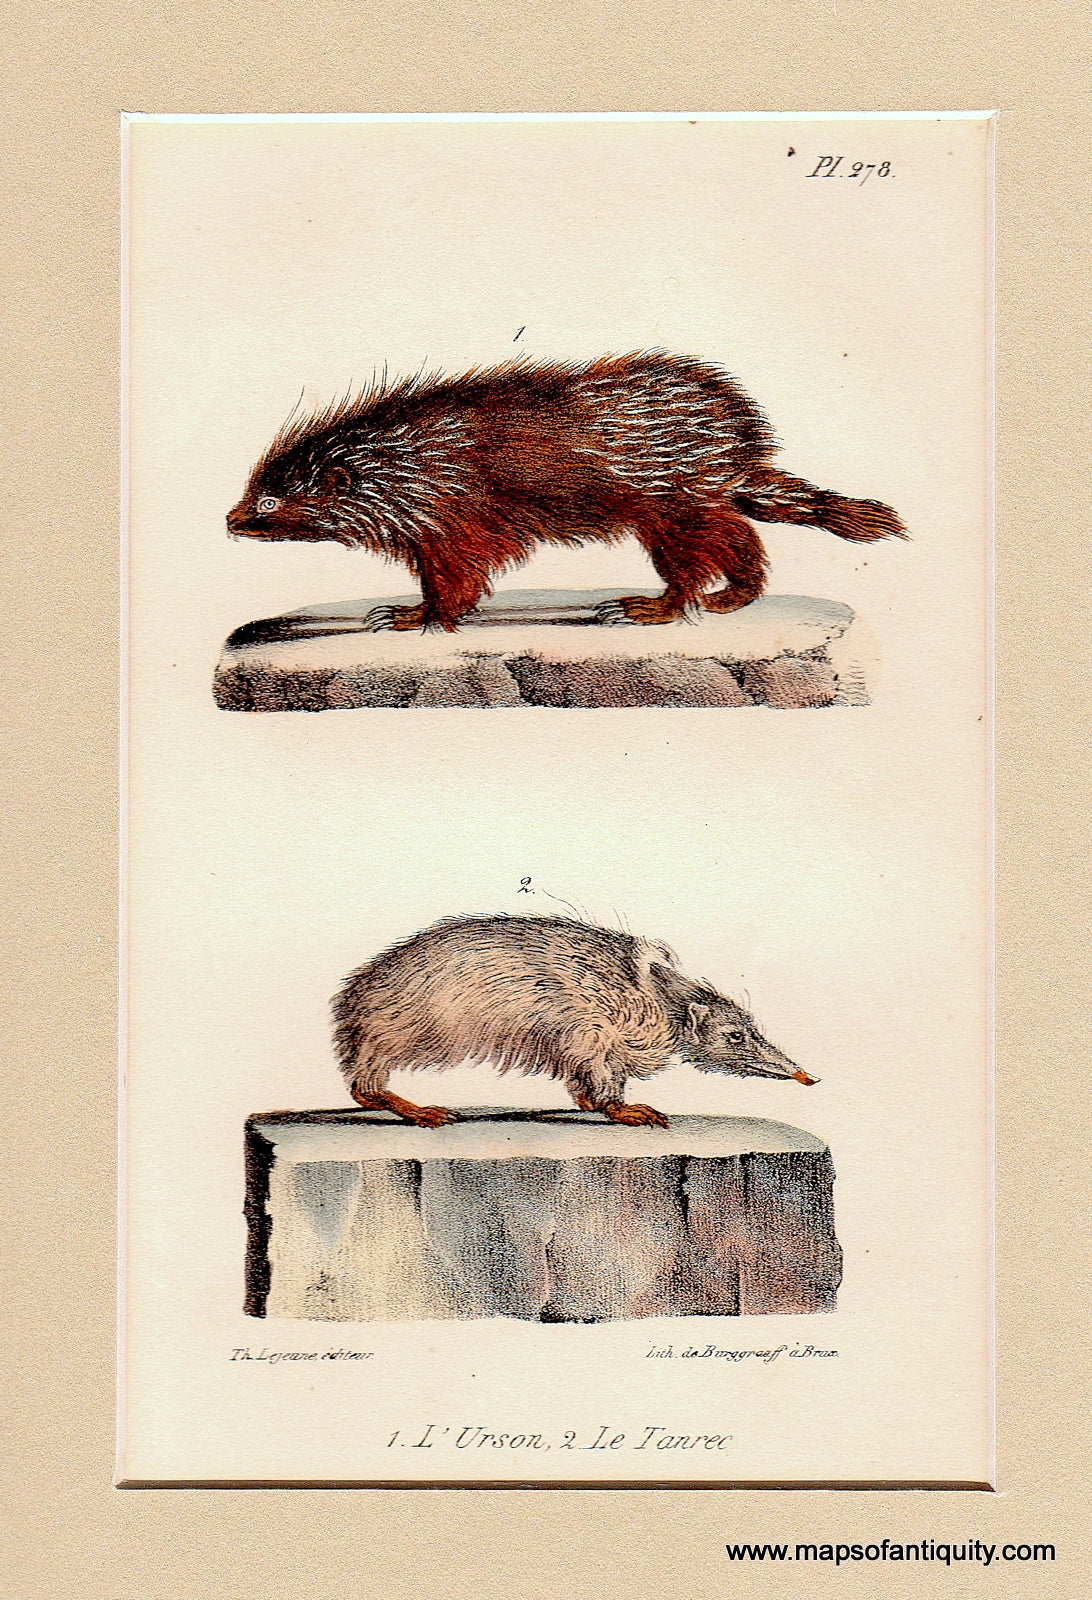 Antique-Illustration-L'Urson-Le-Tanrec.-Plate-278.-**********-Natural-History-Mammals-1840-Brussels-Maps-Of-Antiquity